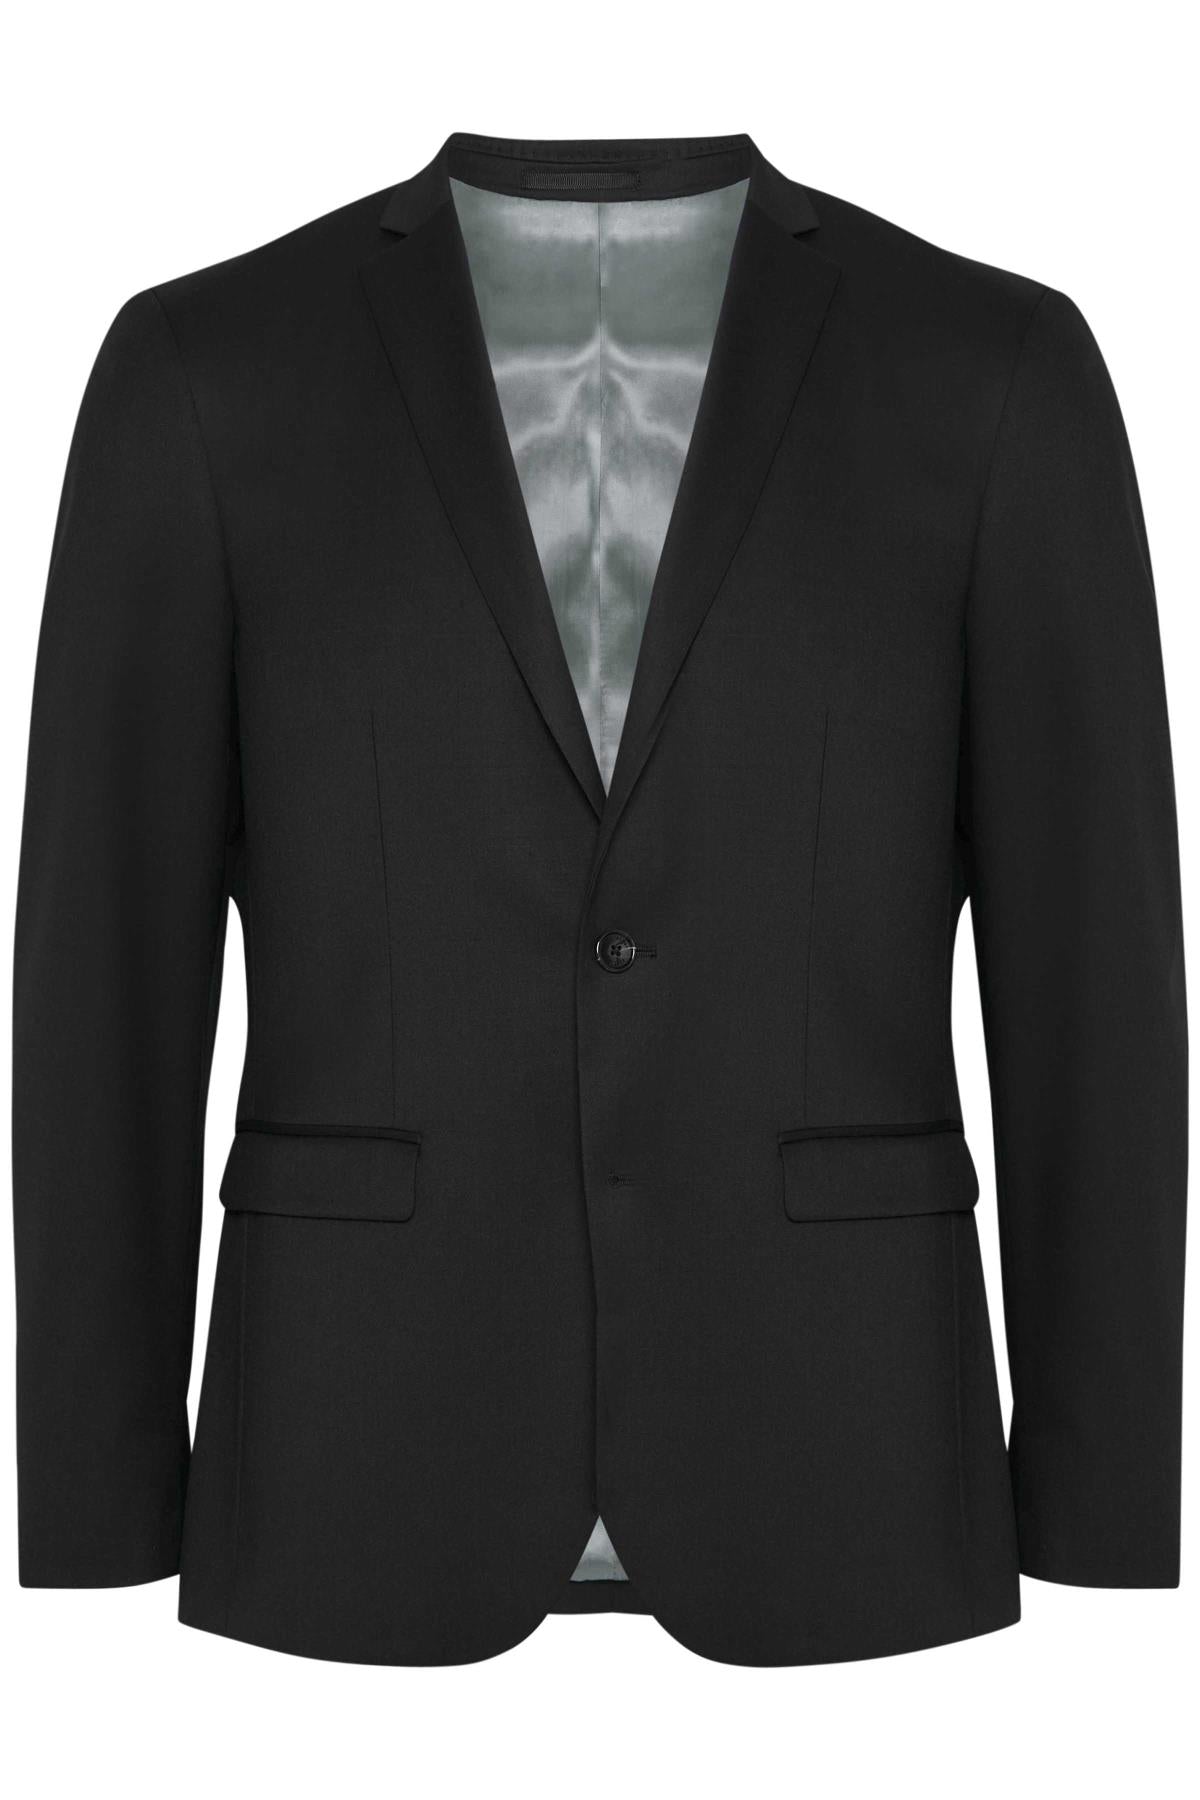 George F Stretch Suit Blazer Black